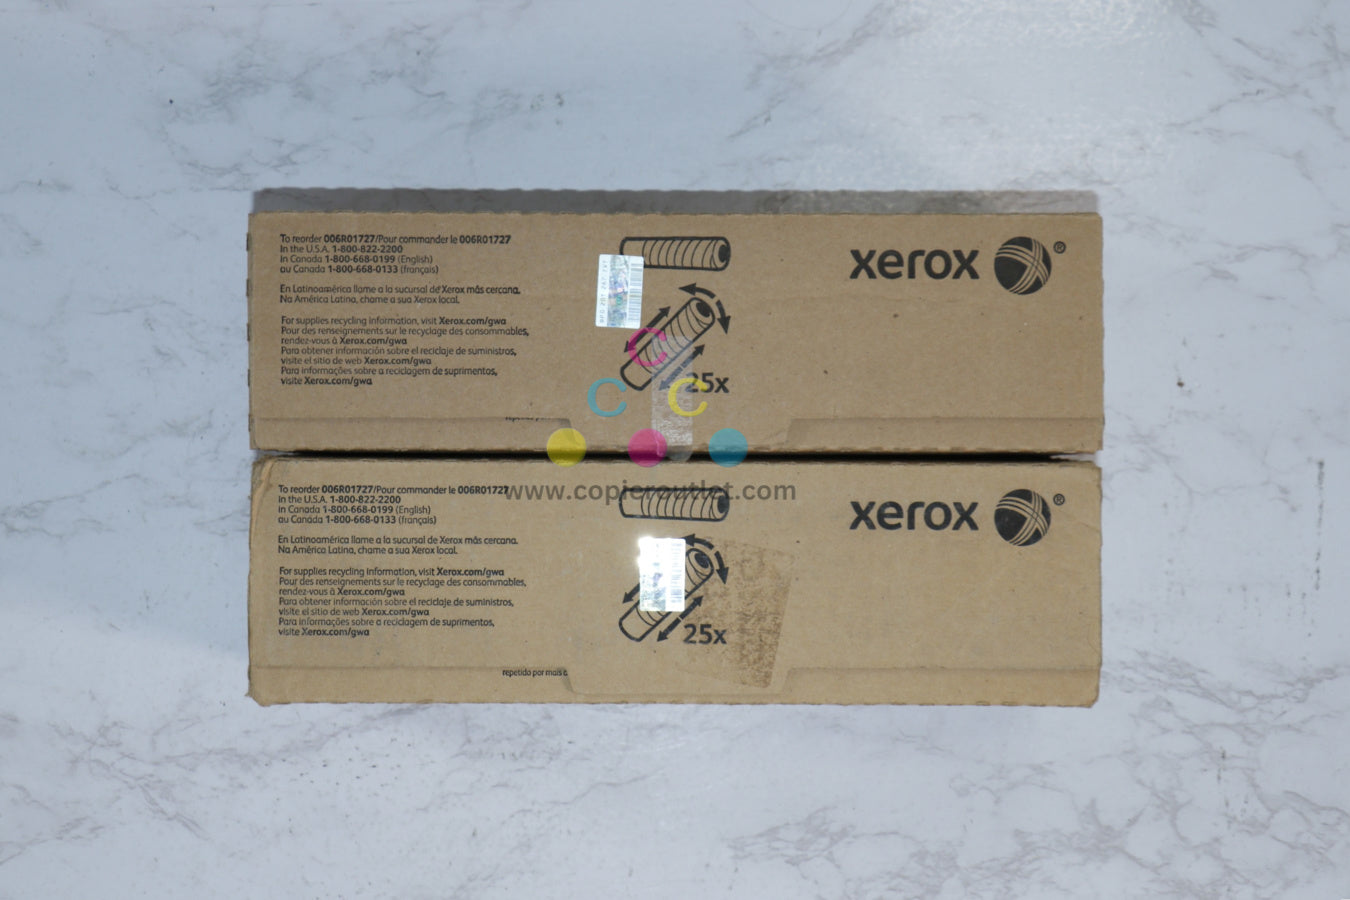 s New OEM Xerox WorkCentre 5030,5050,5632,5638,5645,5655 Black Toners 006R01727